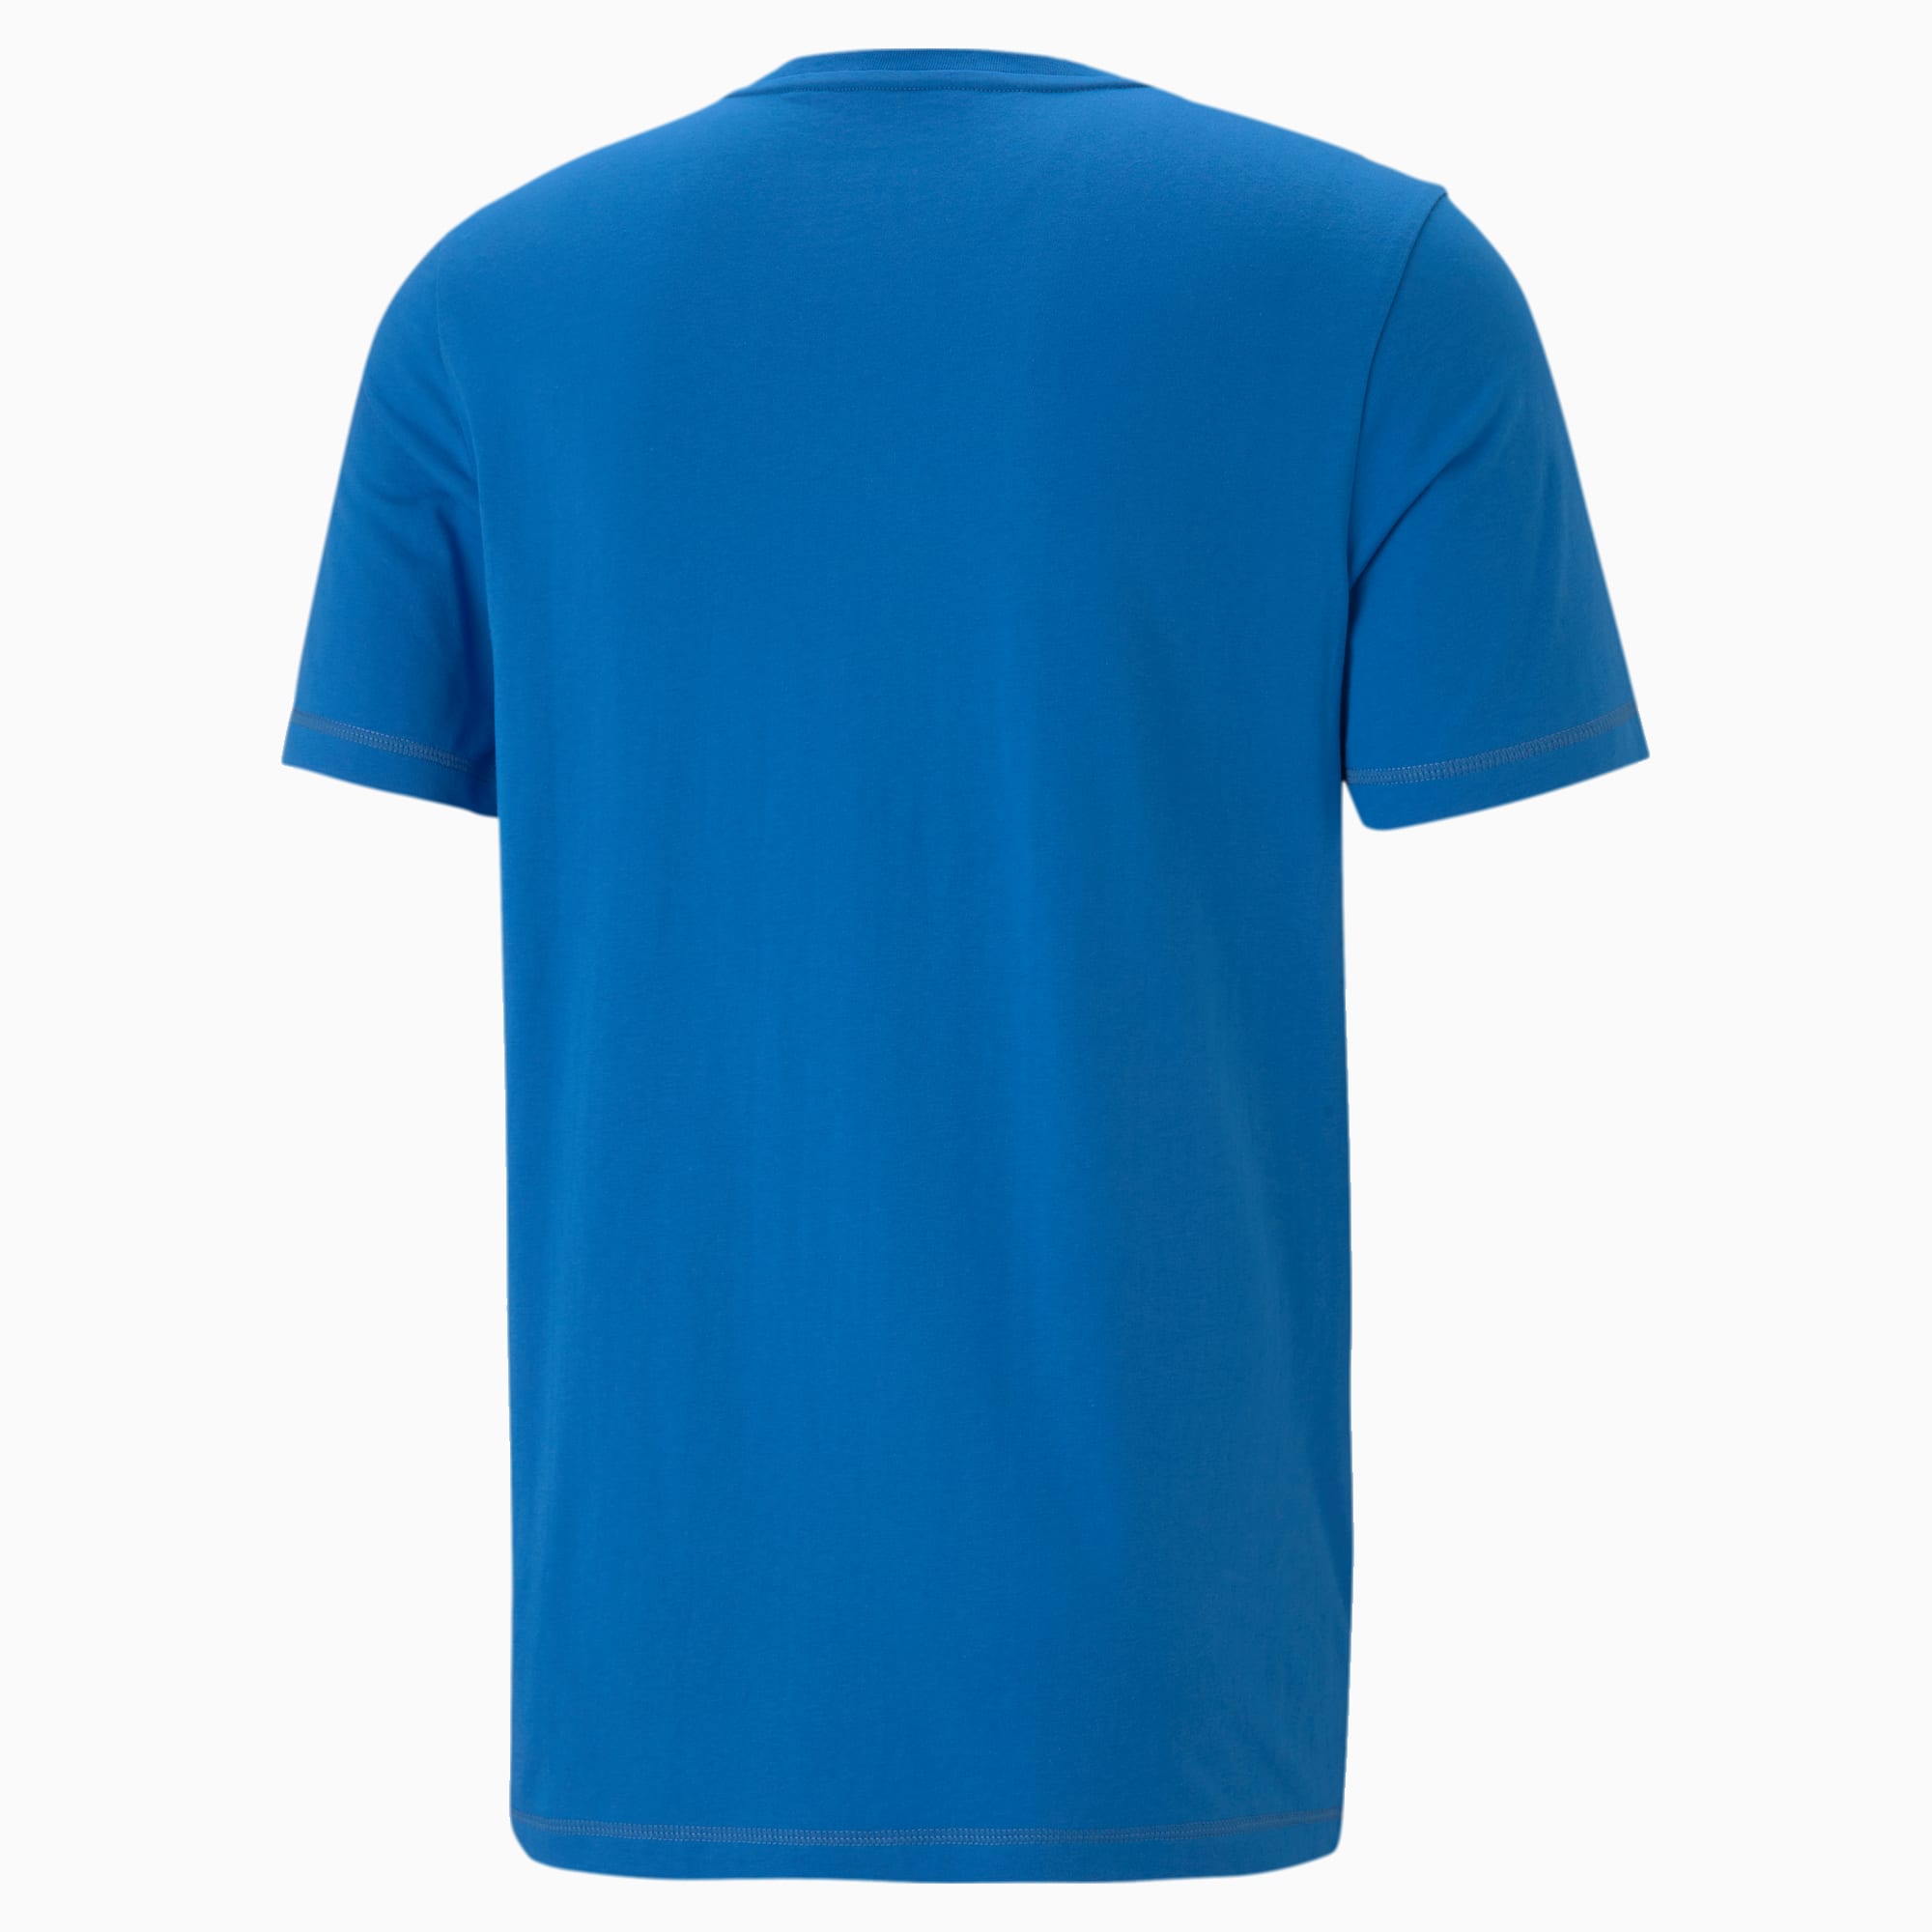 PUMA Active Soft Men's T-Shirt, Royal Blue, Size XL, Clothing